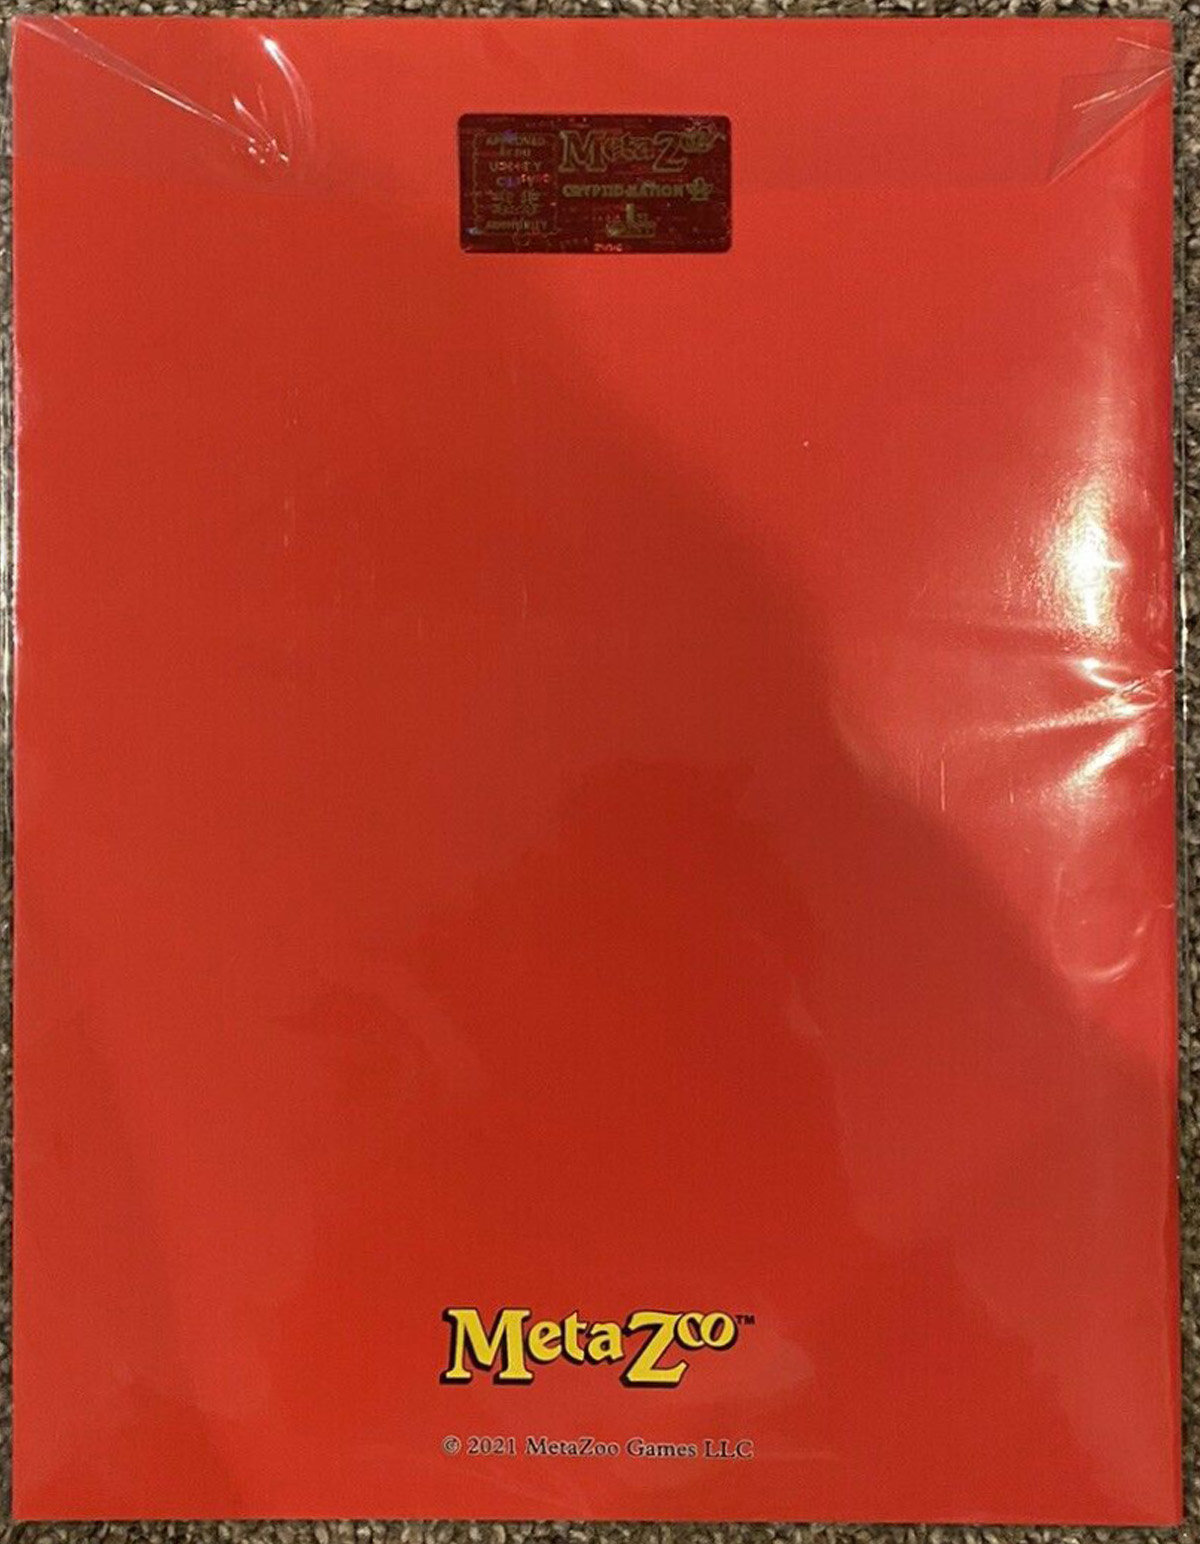 MetaZoo Illustrated Novel - Chapter 1 Print 1 - Back